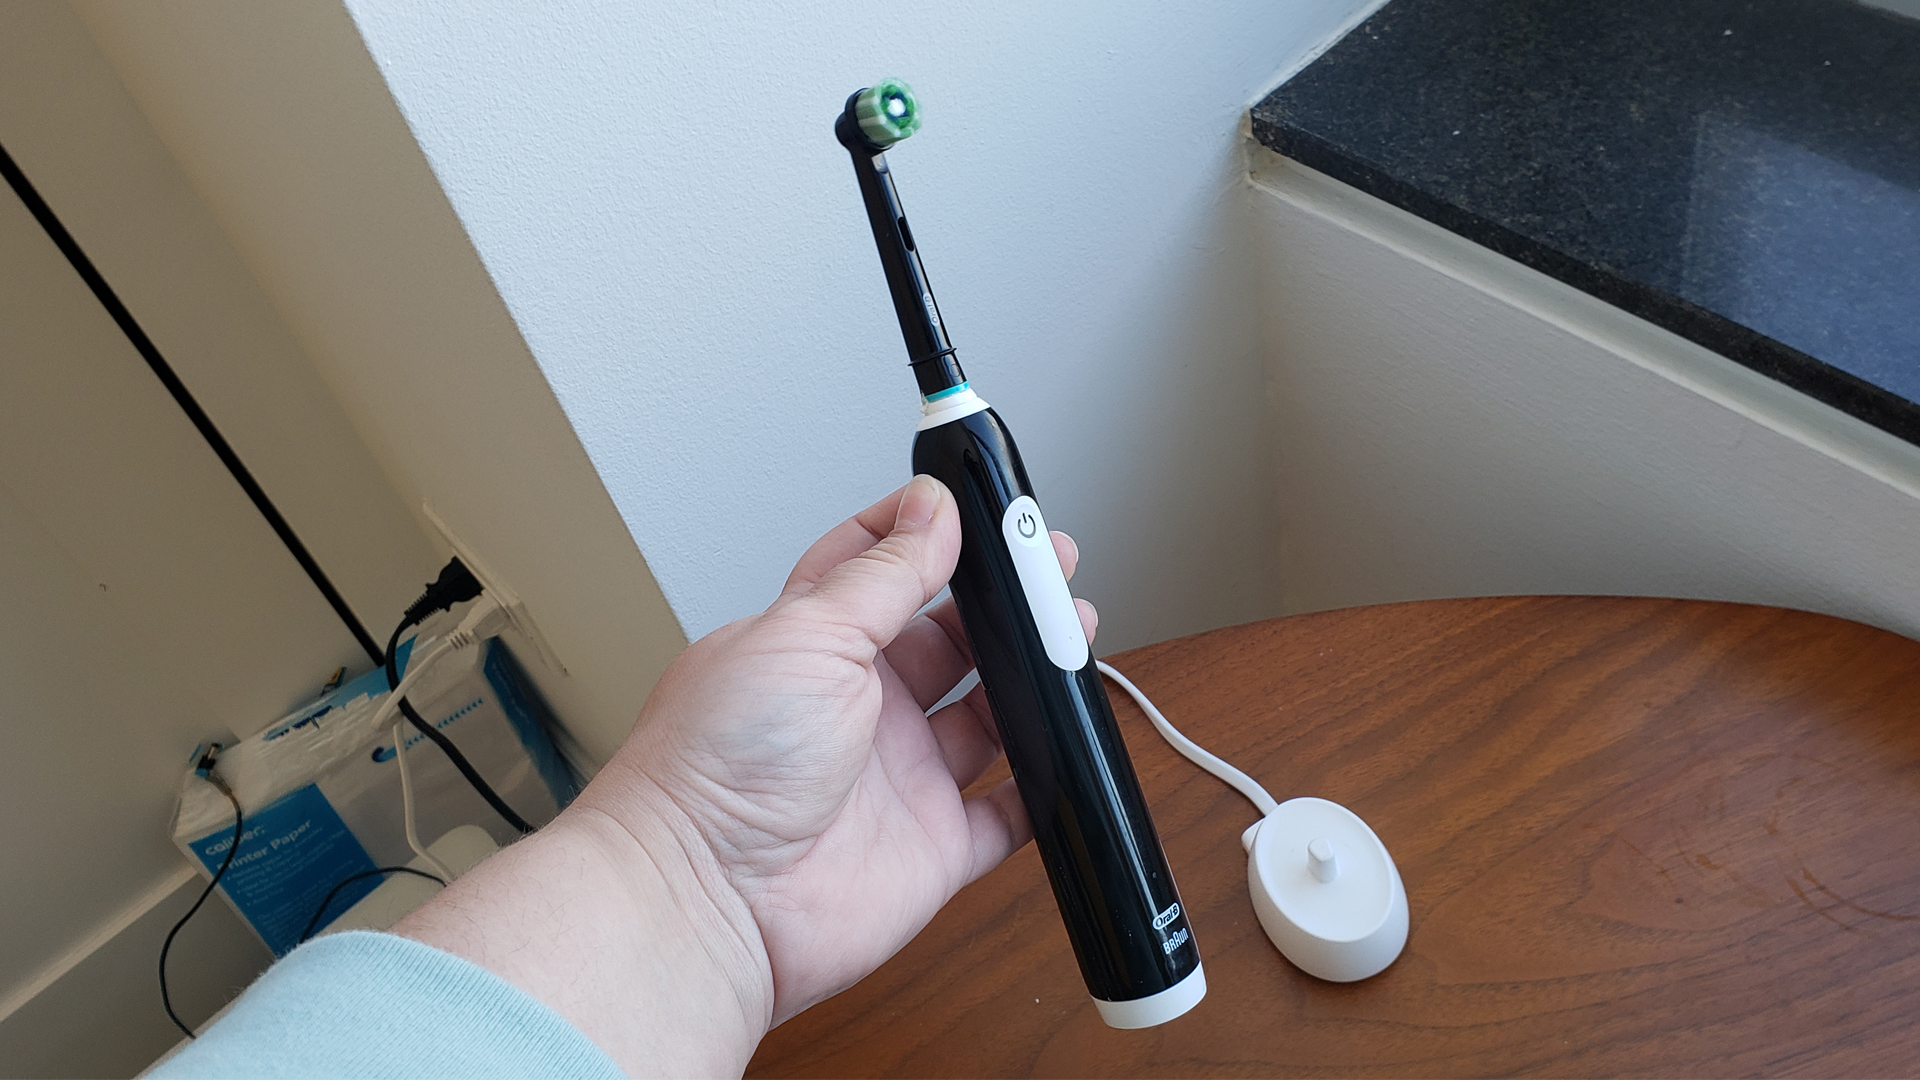 Oral B Pro 1000 electric toothbrush